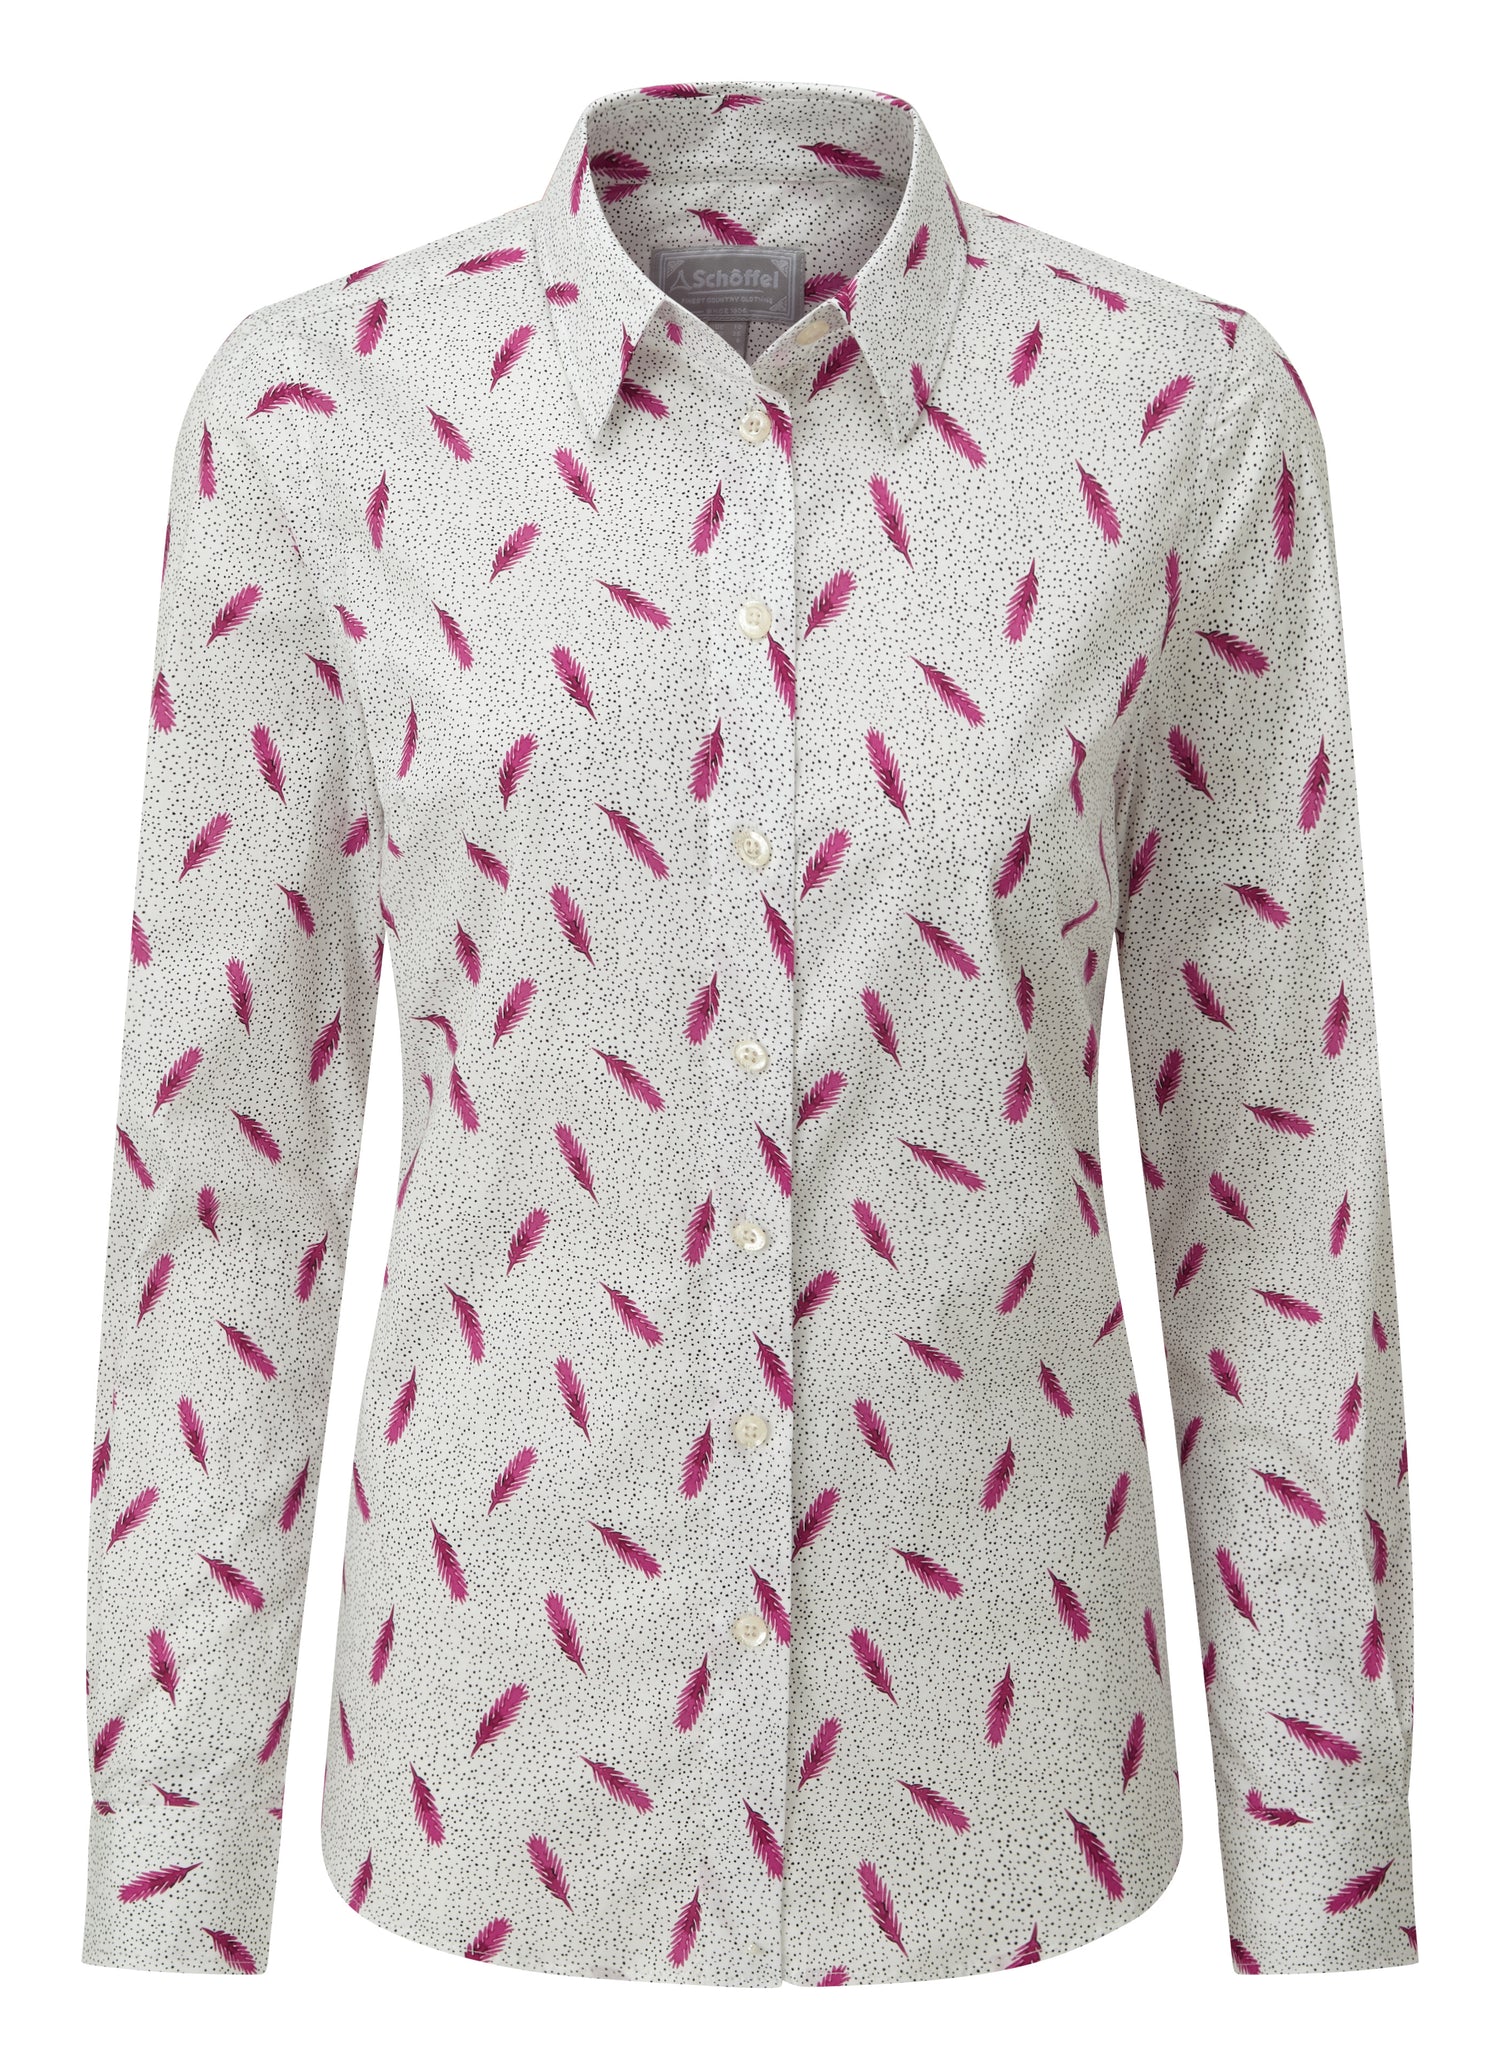 Norfolk Shirt - Sprig Raspberry